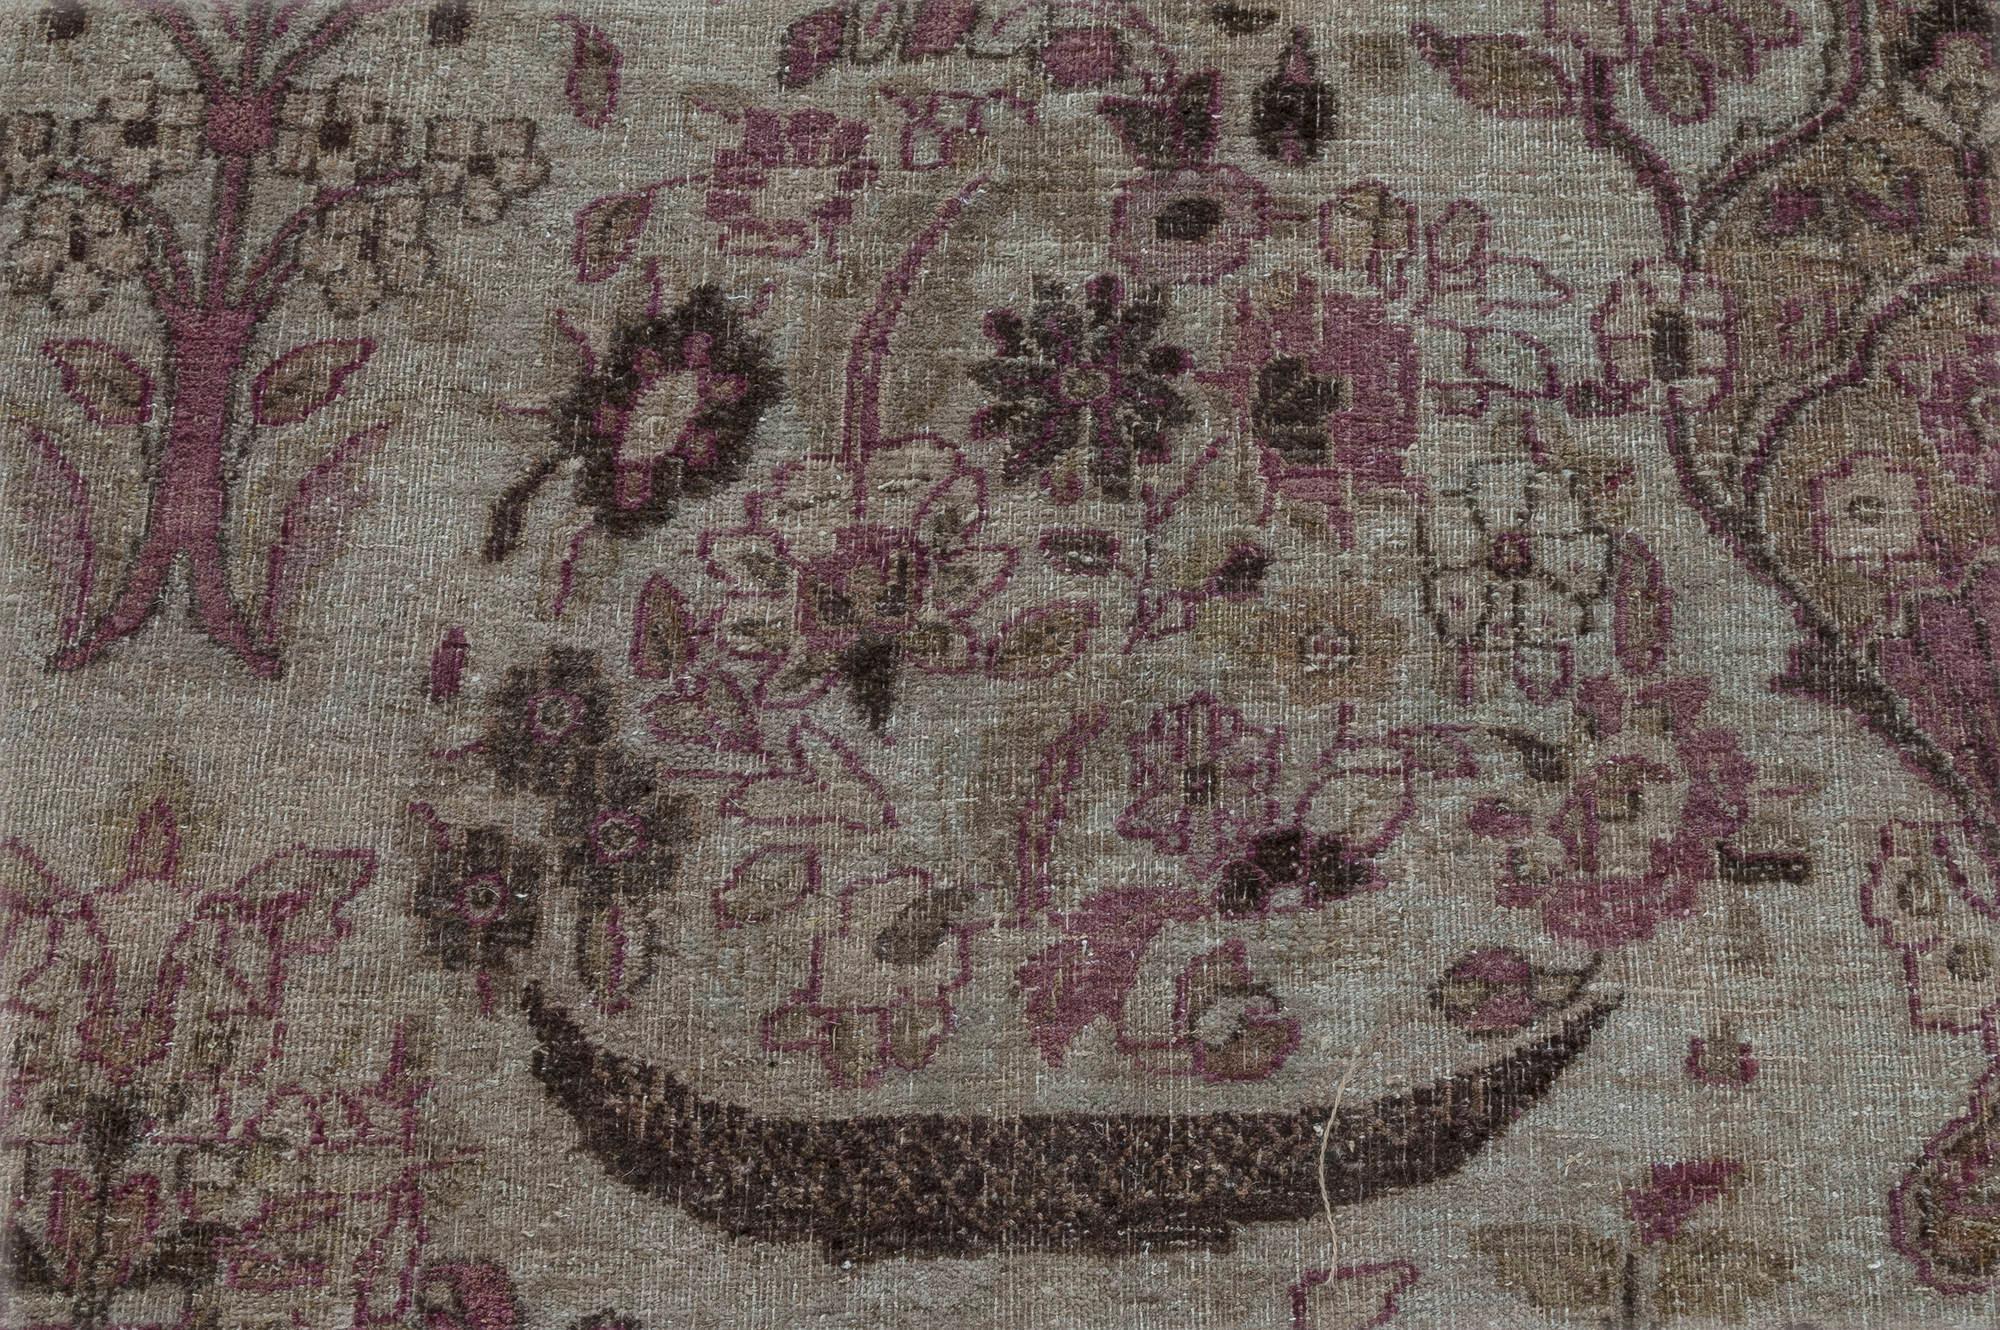 Mid-20th century Persian Tabriz beige, purple handwoven wool rug 
Size: 10'1